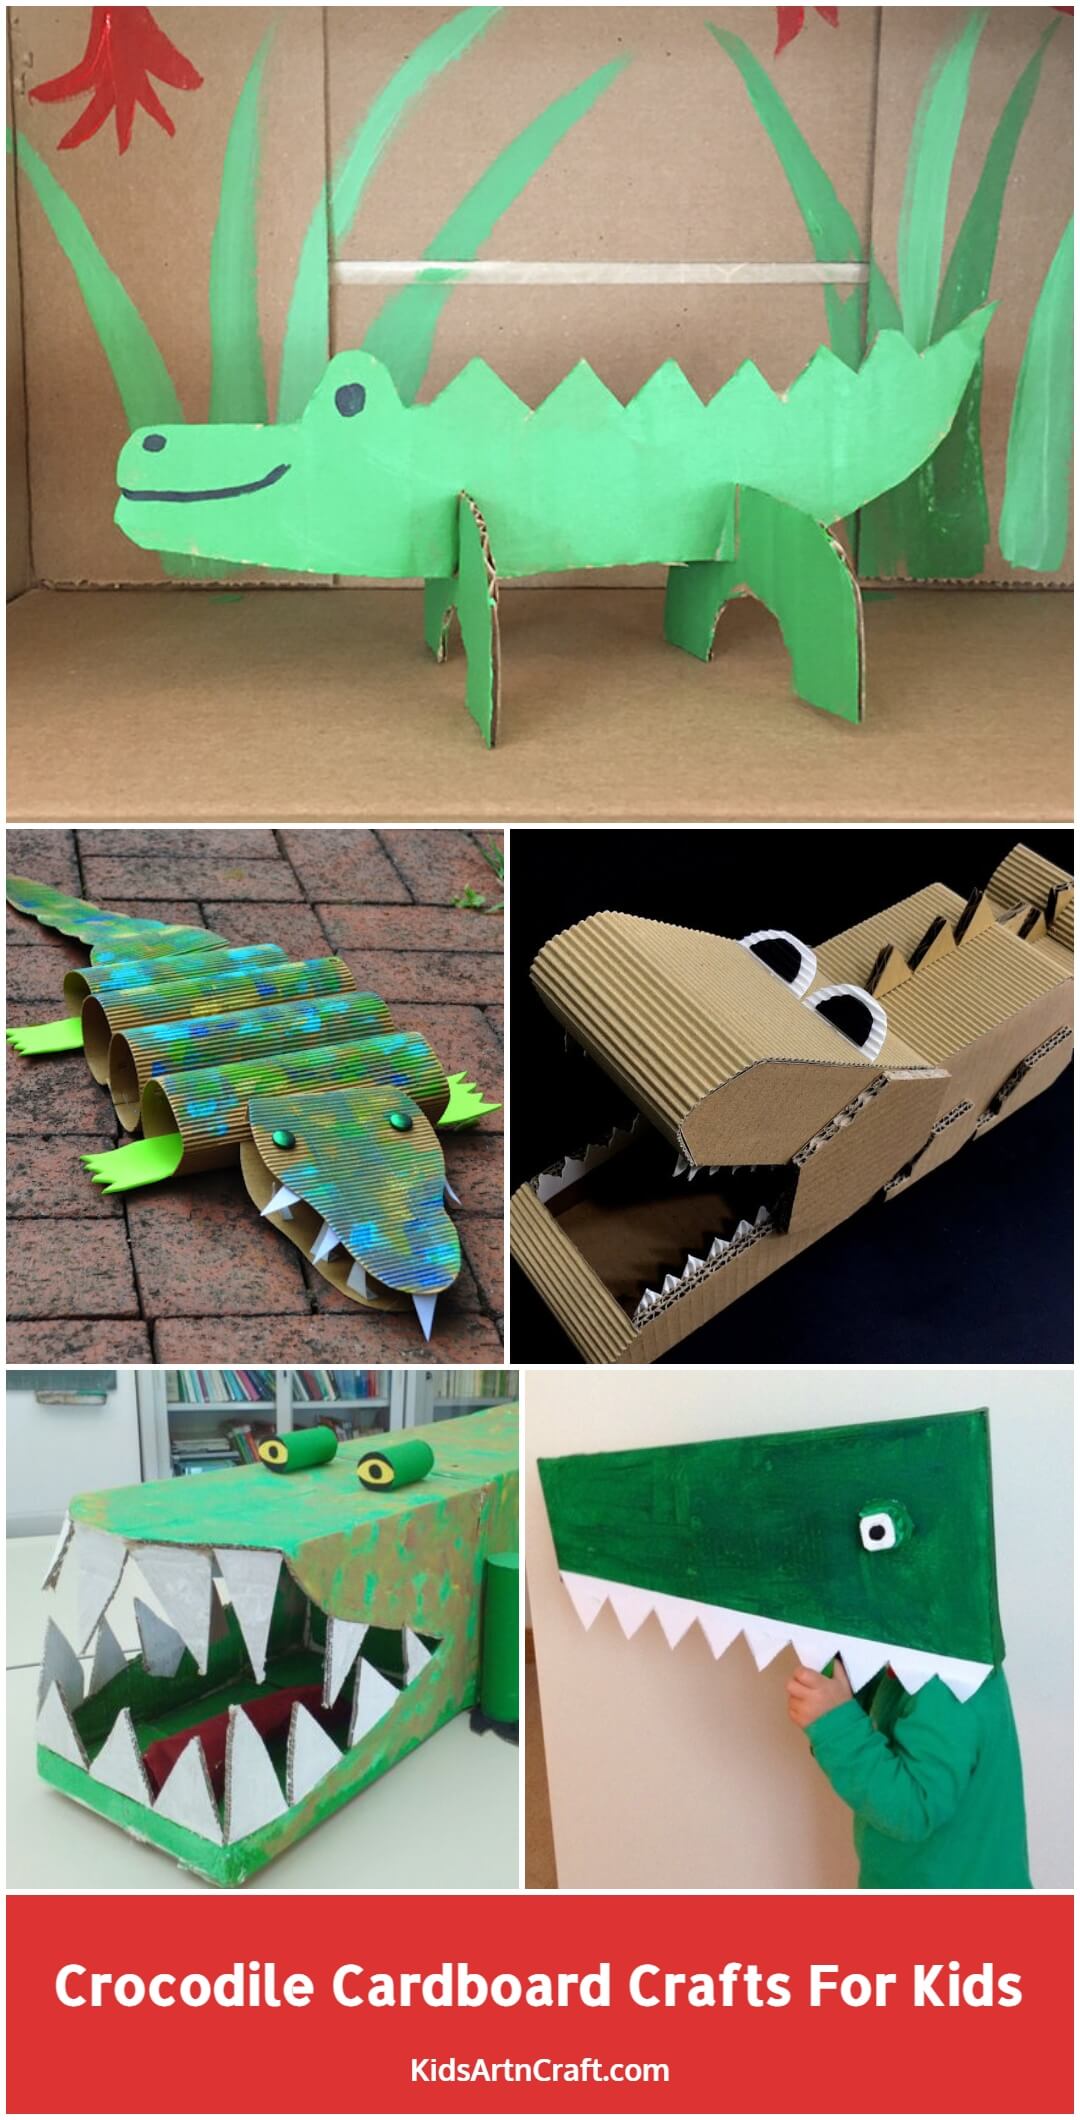 Crocodile Cardboard Crafts For Kids